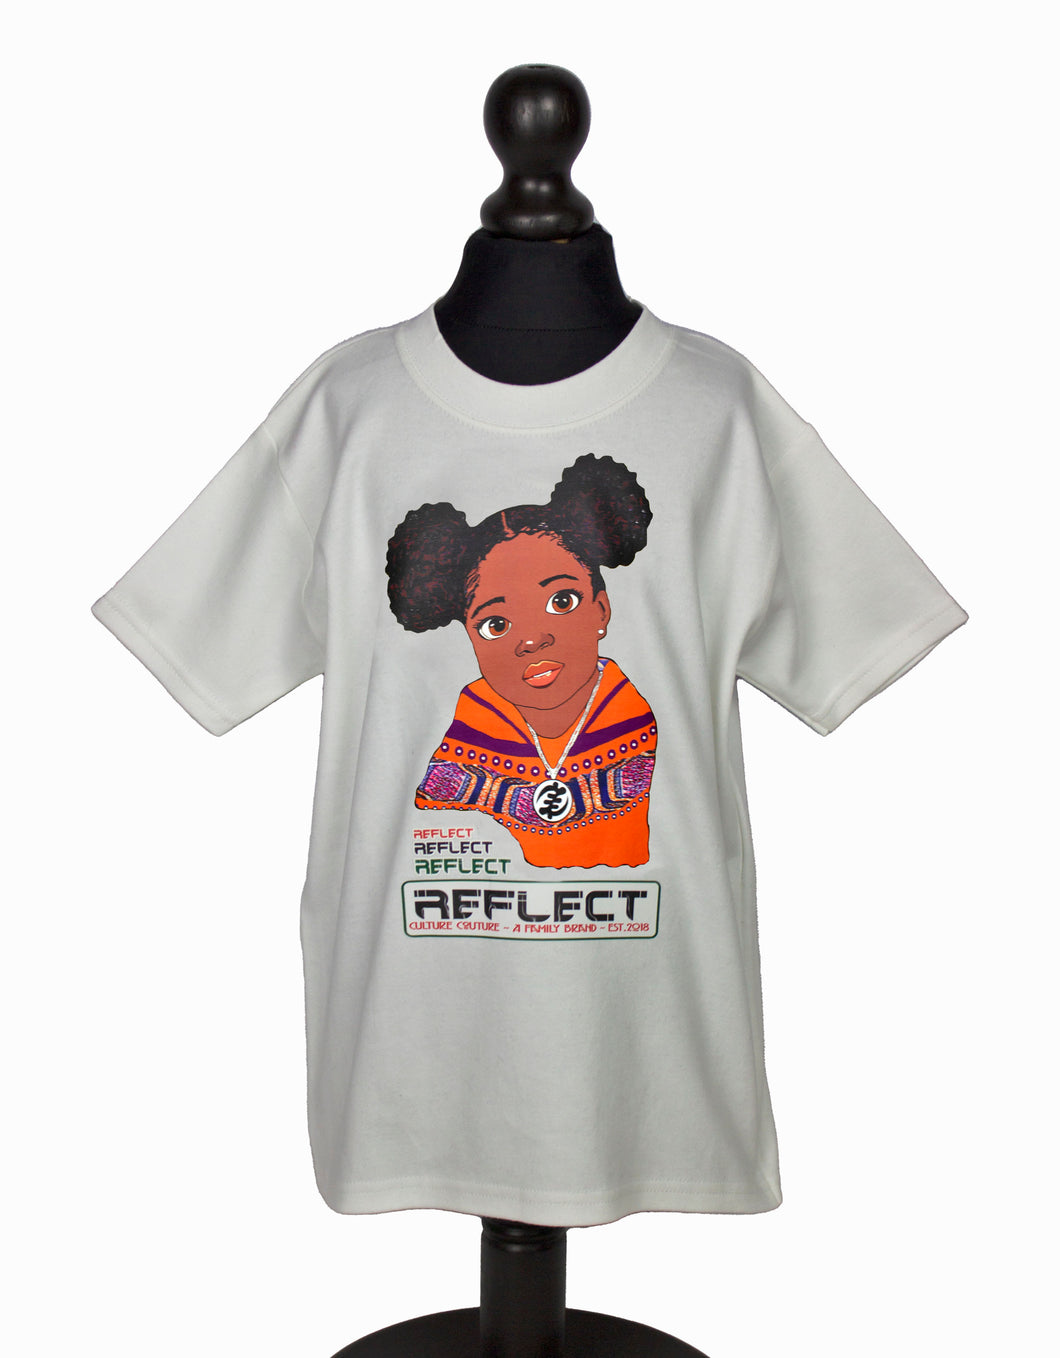 REFLECT Short Sleeve T-shirt Girls 2 [WHITE]